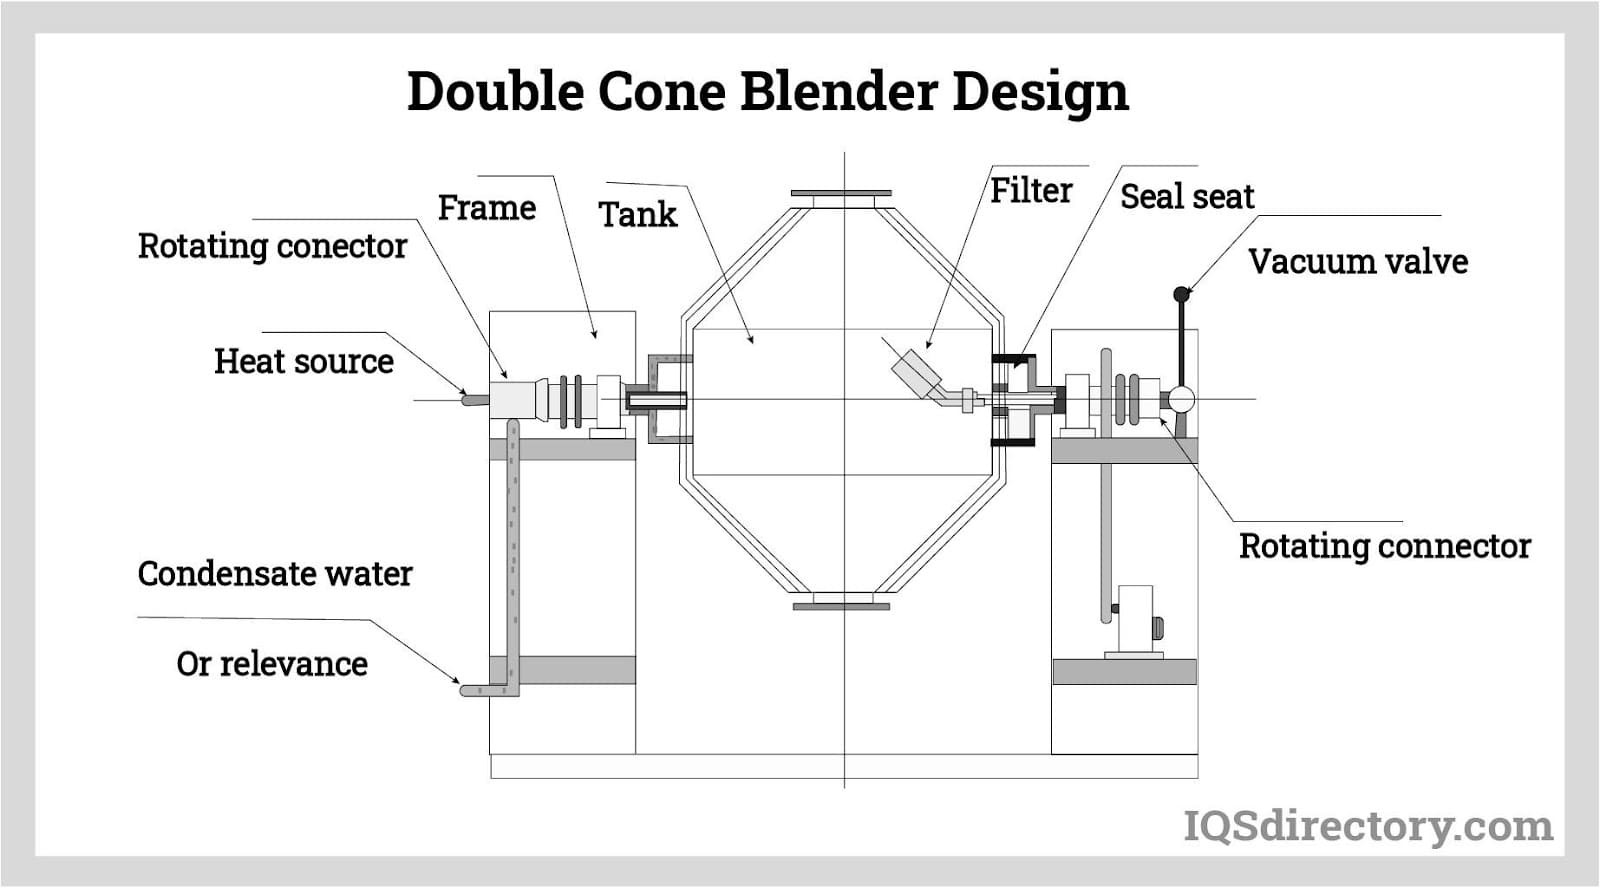 Double Cone Blender Design